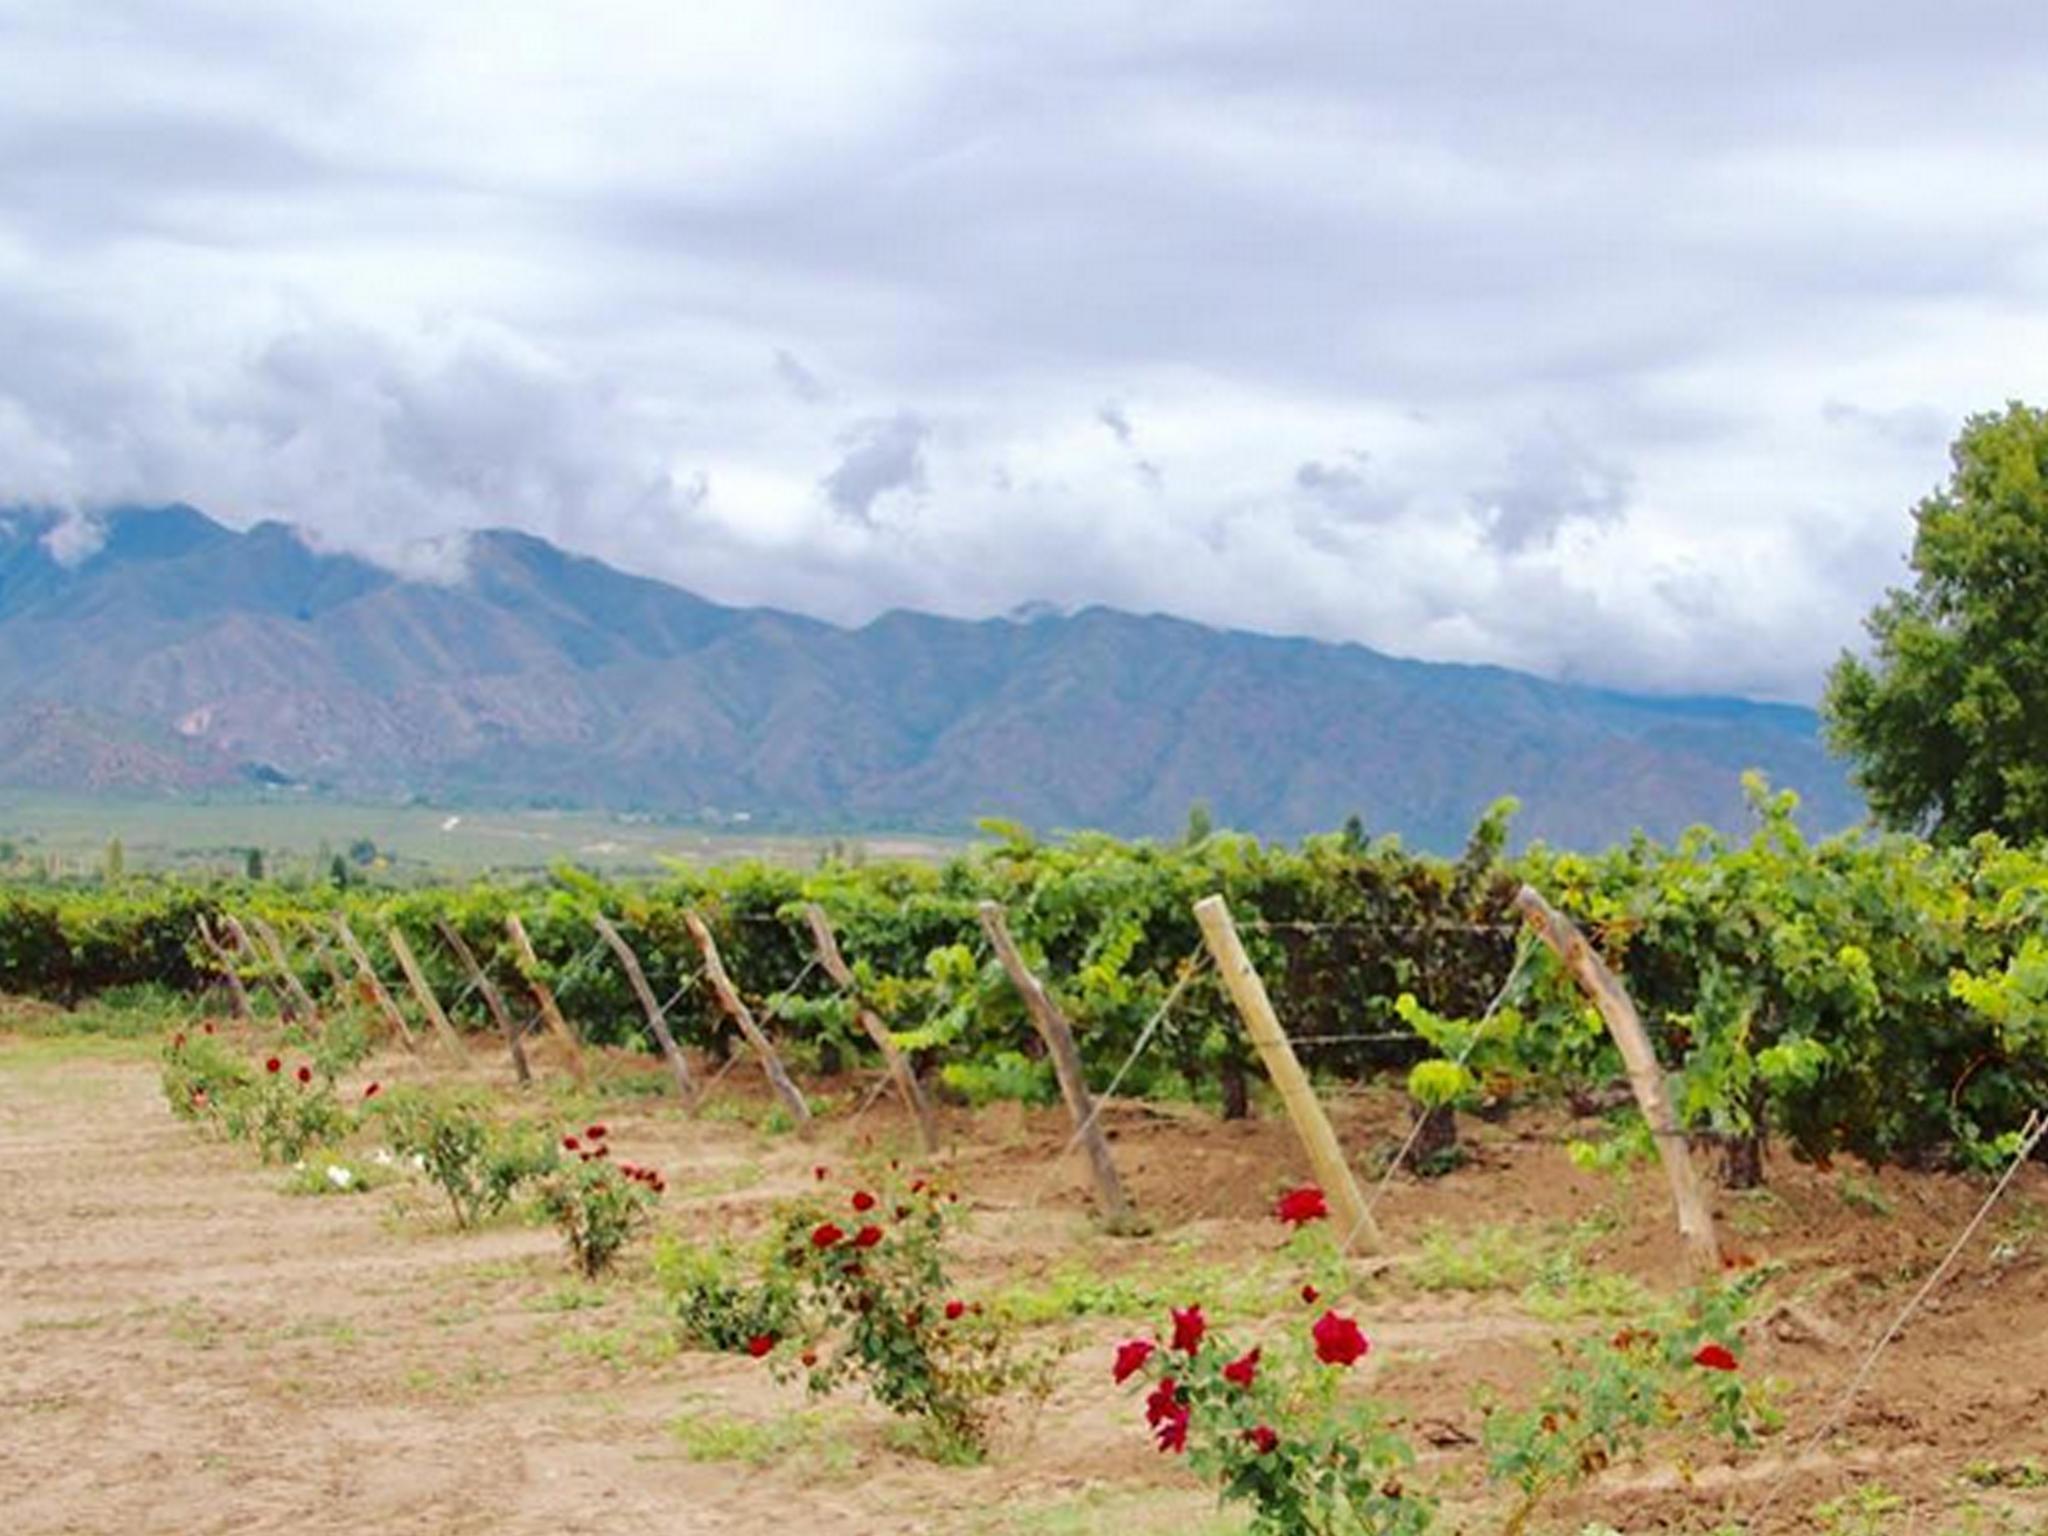 Vineyards in the Jujuy region start at around 2,200m above sea level